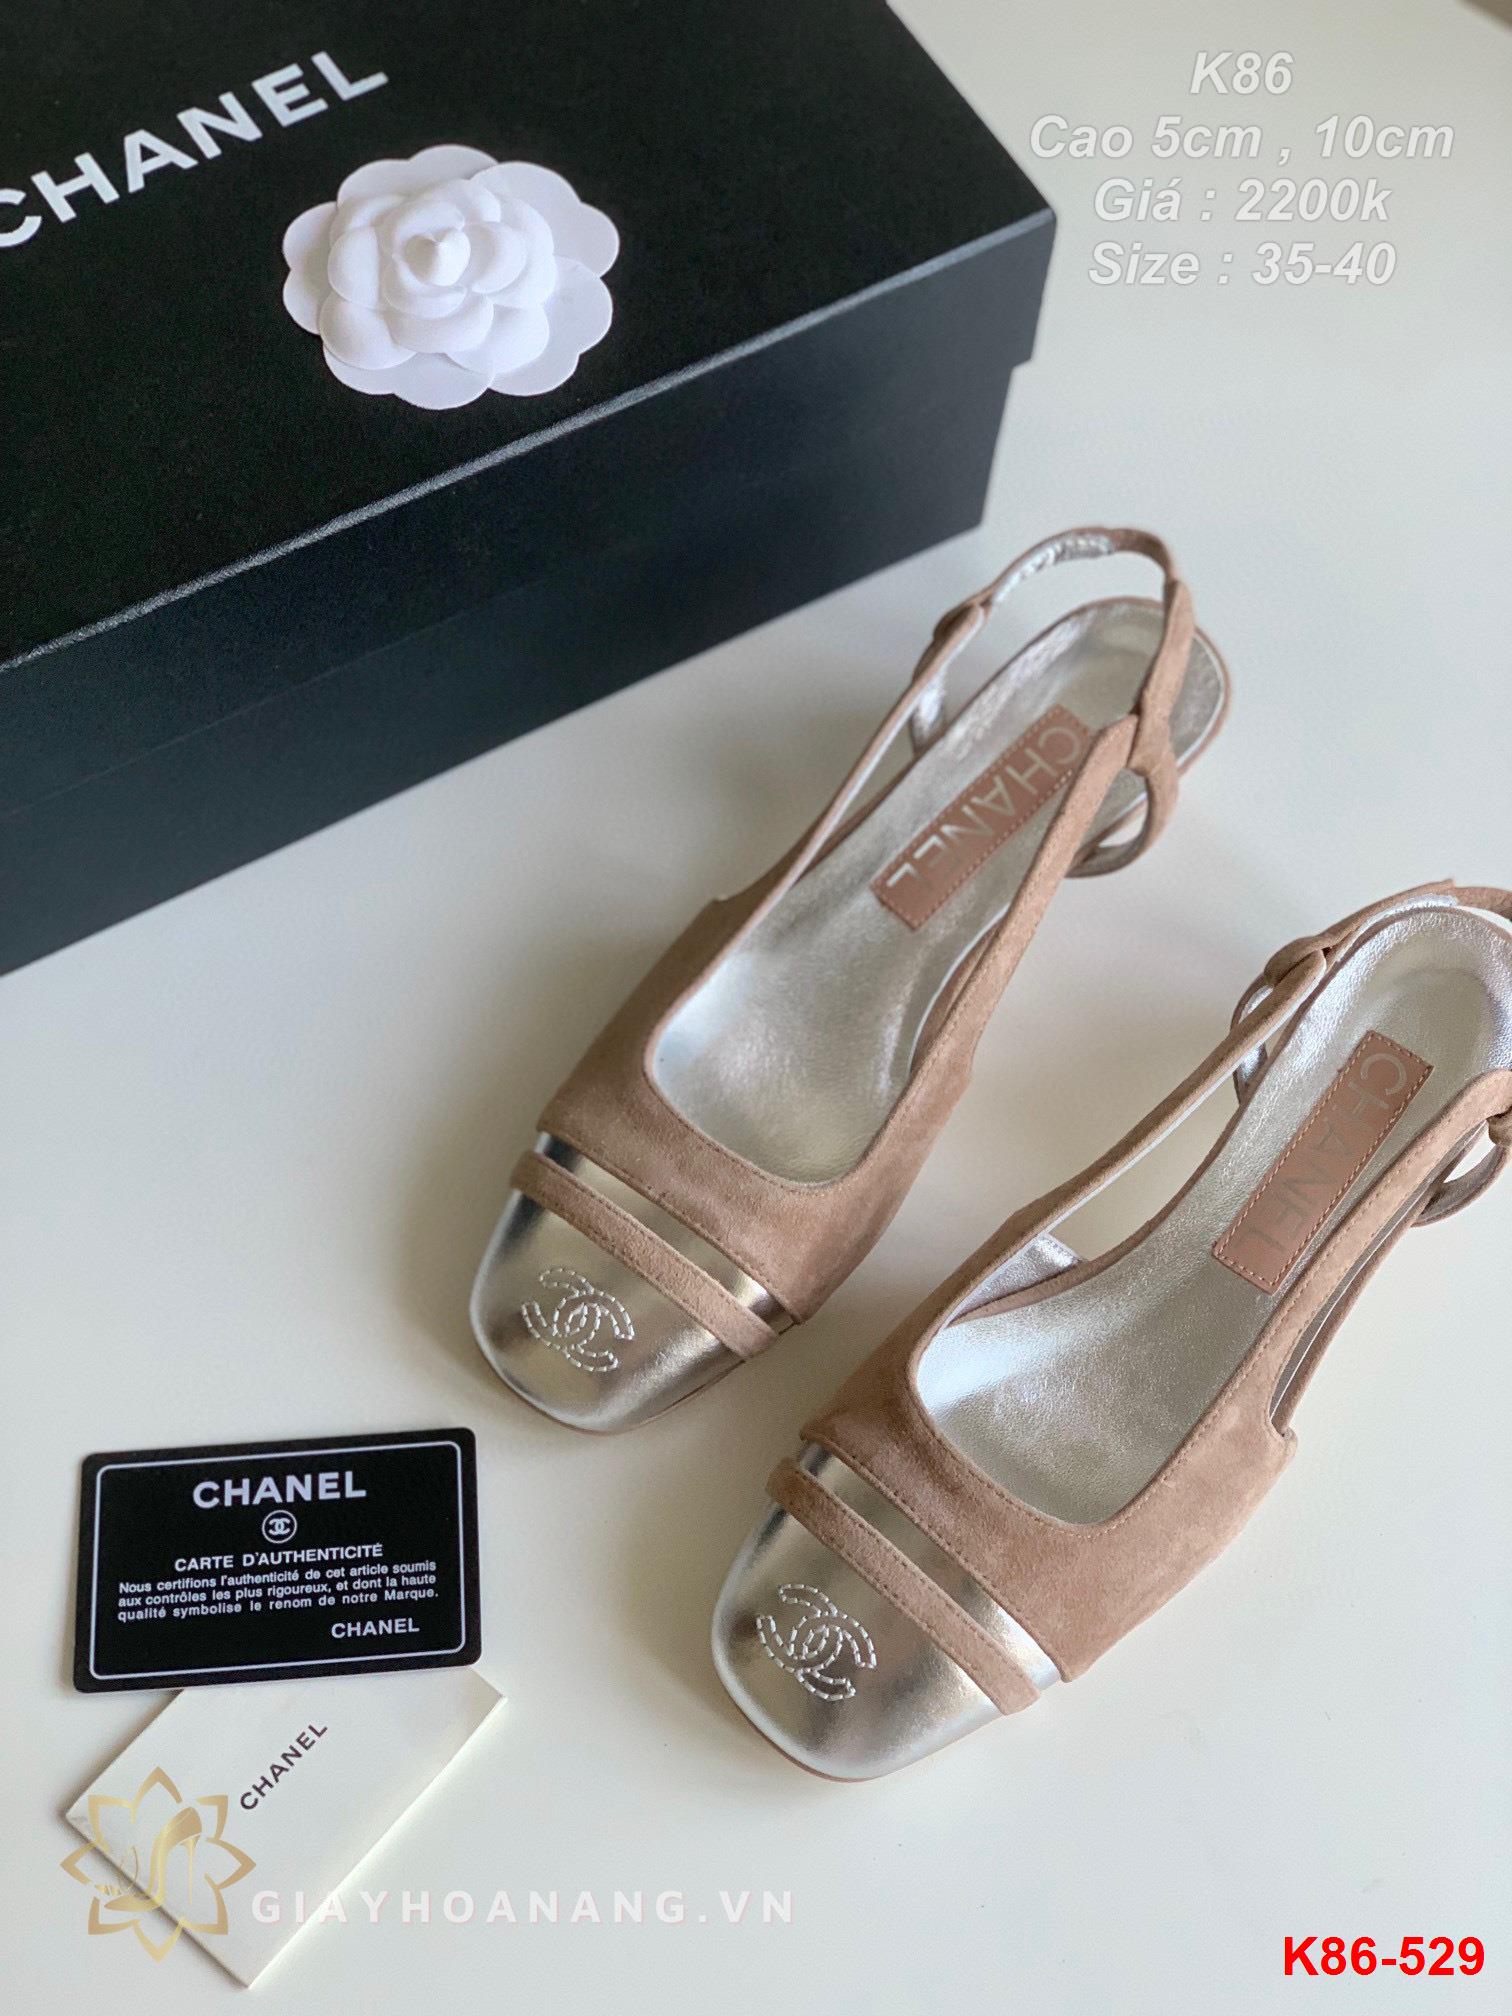 K86-529 Chanel sandal cao 5cm , 10cm siêu cấp